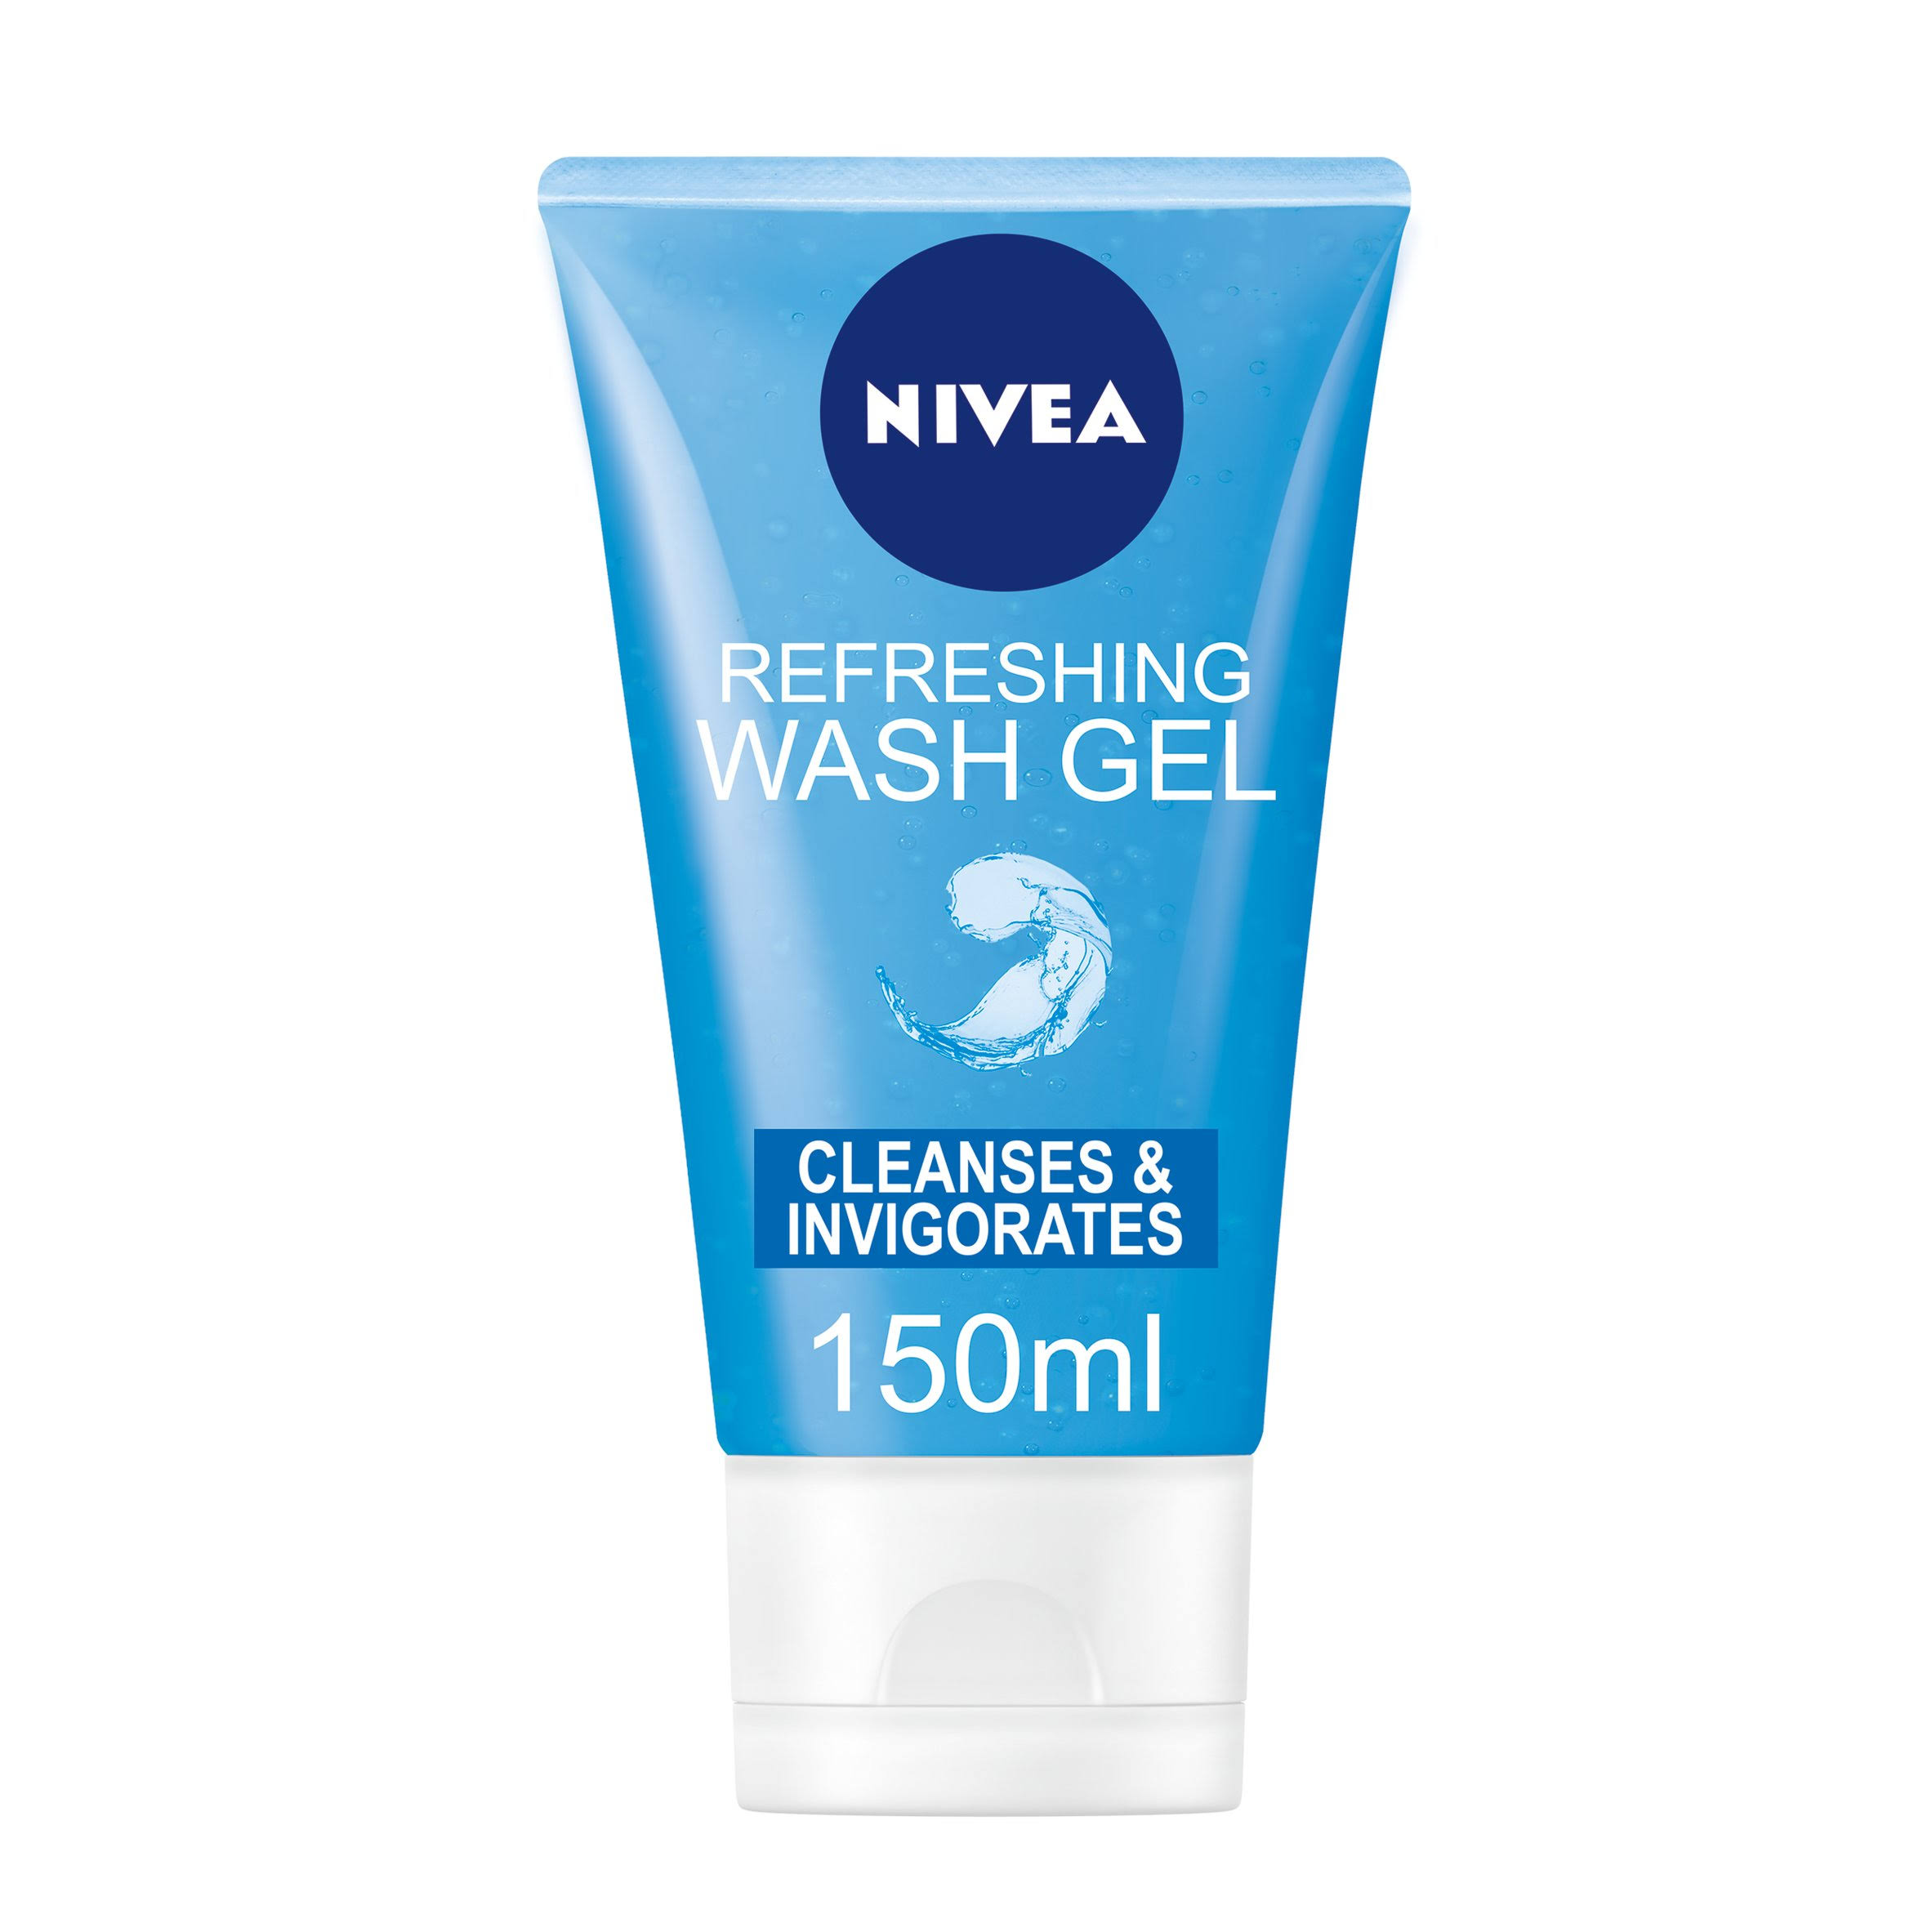 Nivea Daily Essentials Refreshing Facial Wash Gel - 150ml